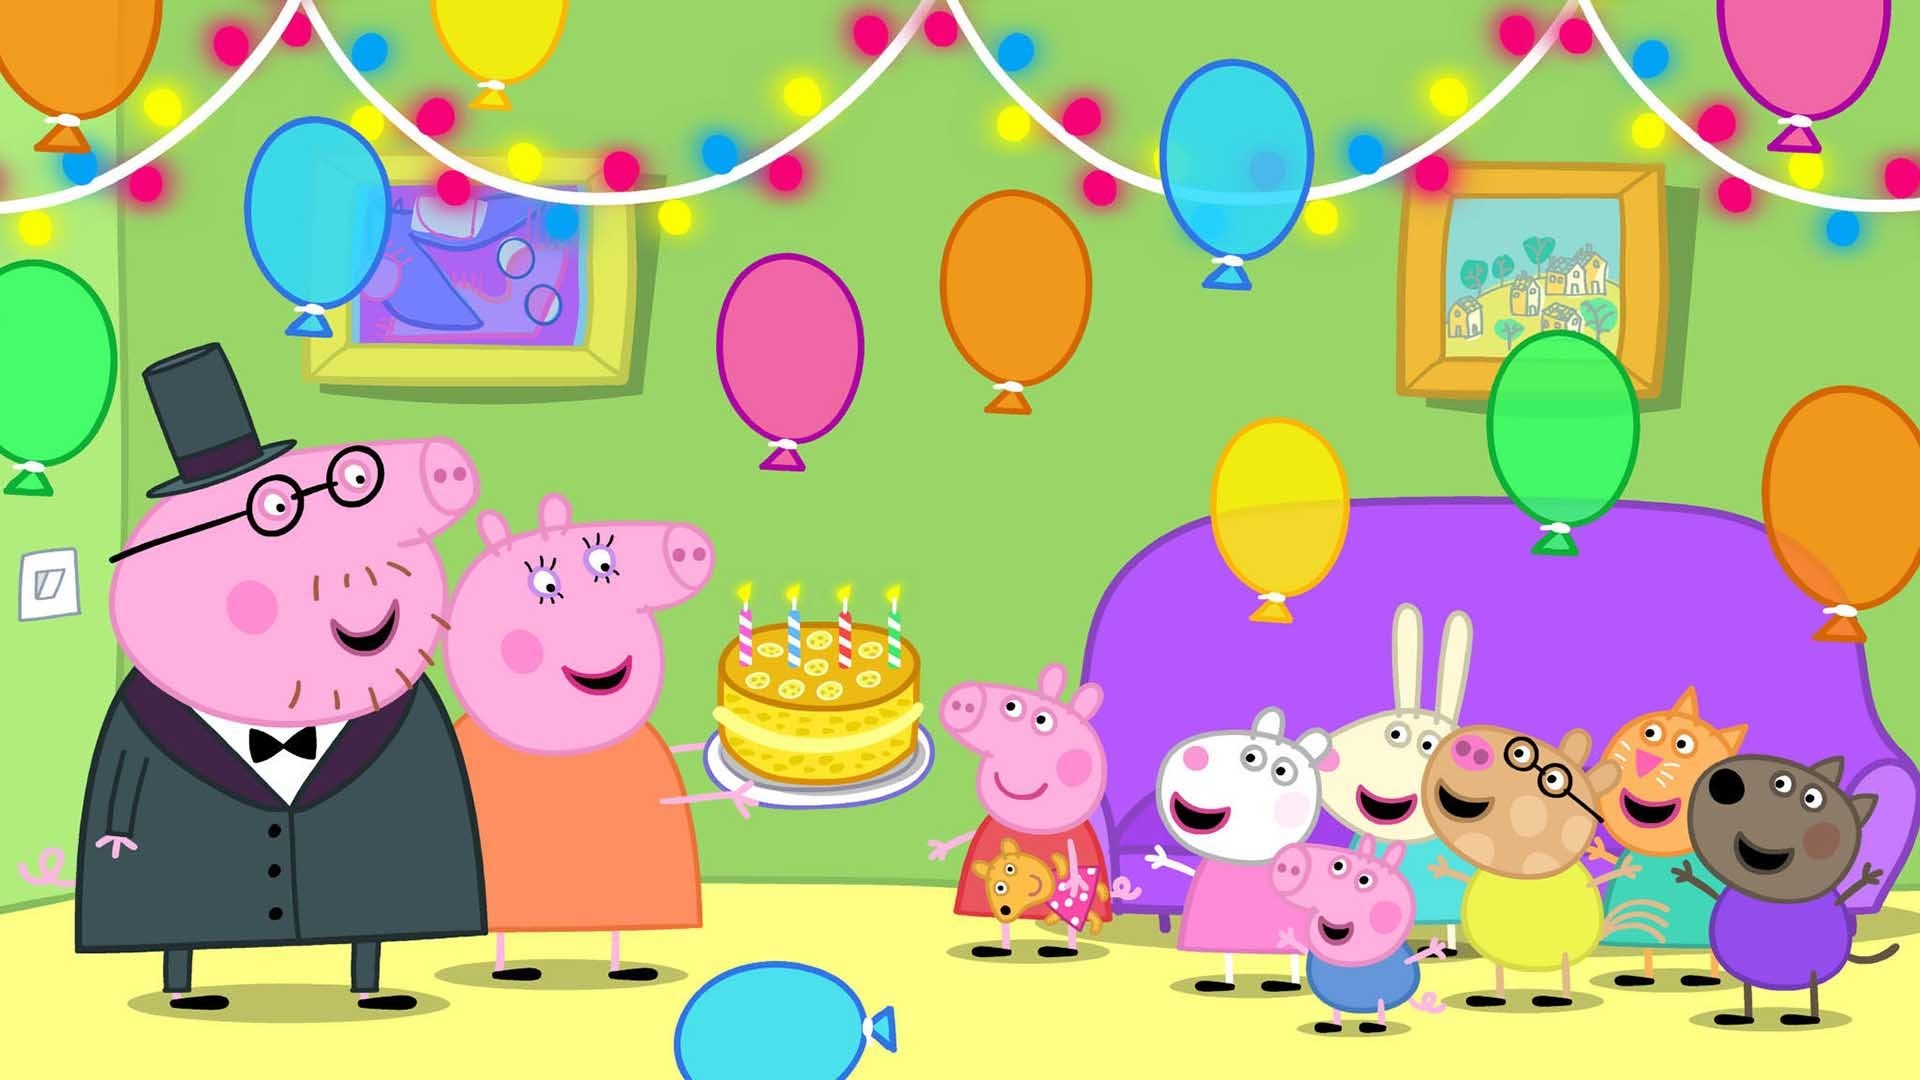 1920x1080 Peppa pig world! Peppa pig videos! peppapig movie! Peppa pig birthday party  2016 - YouTube